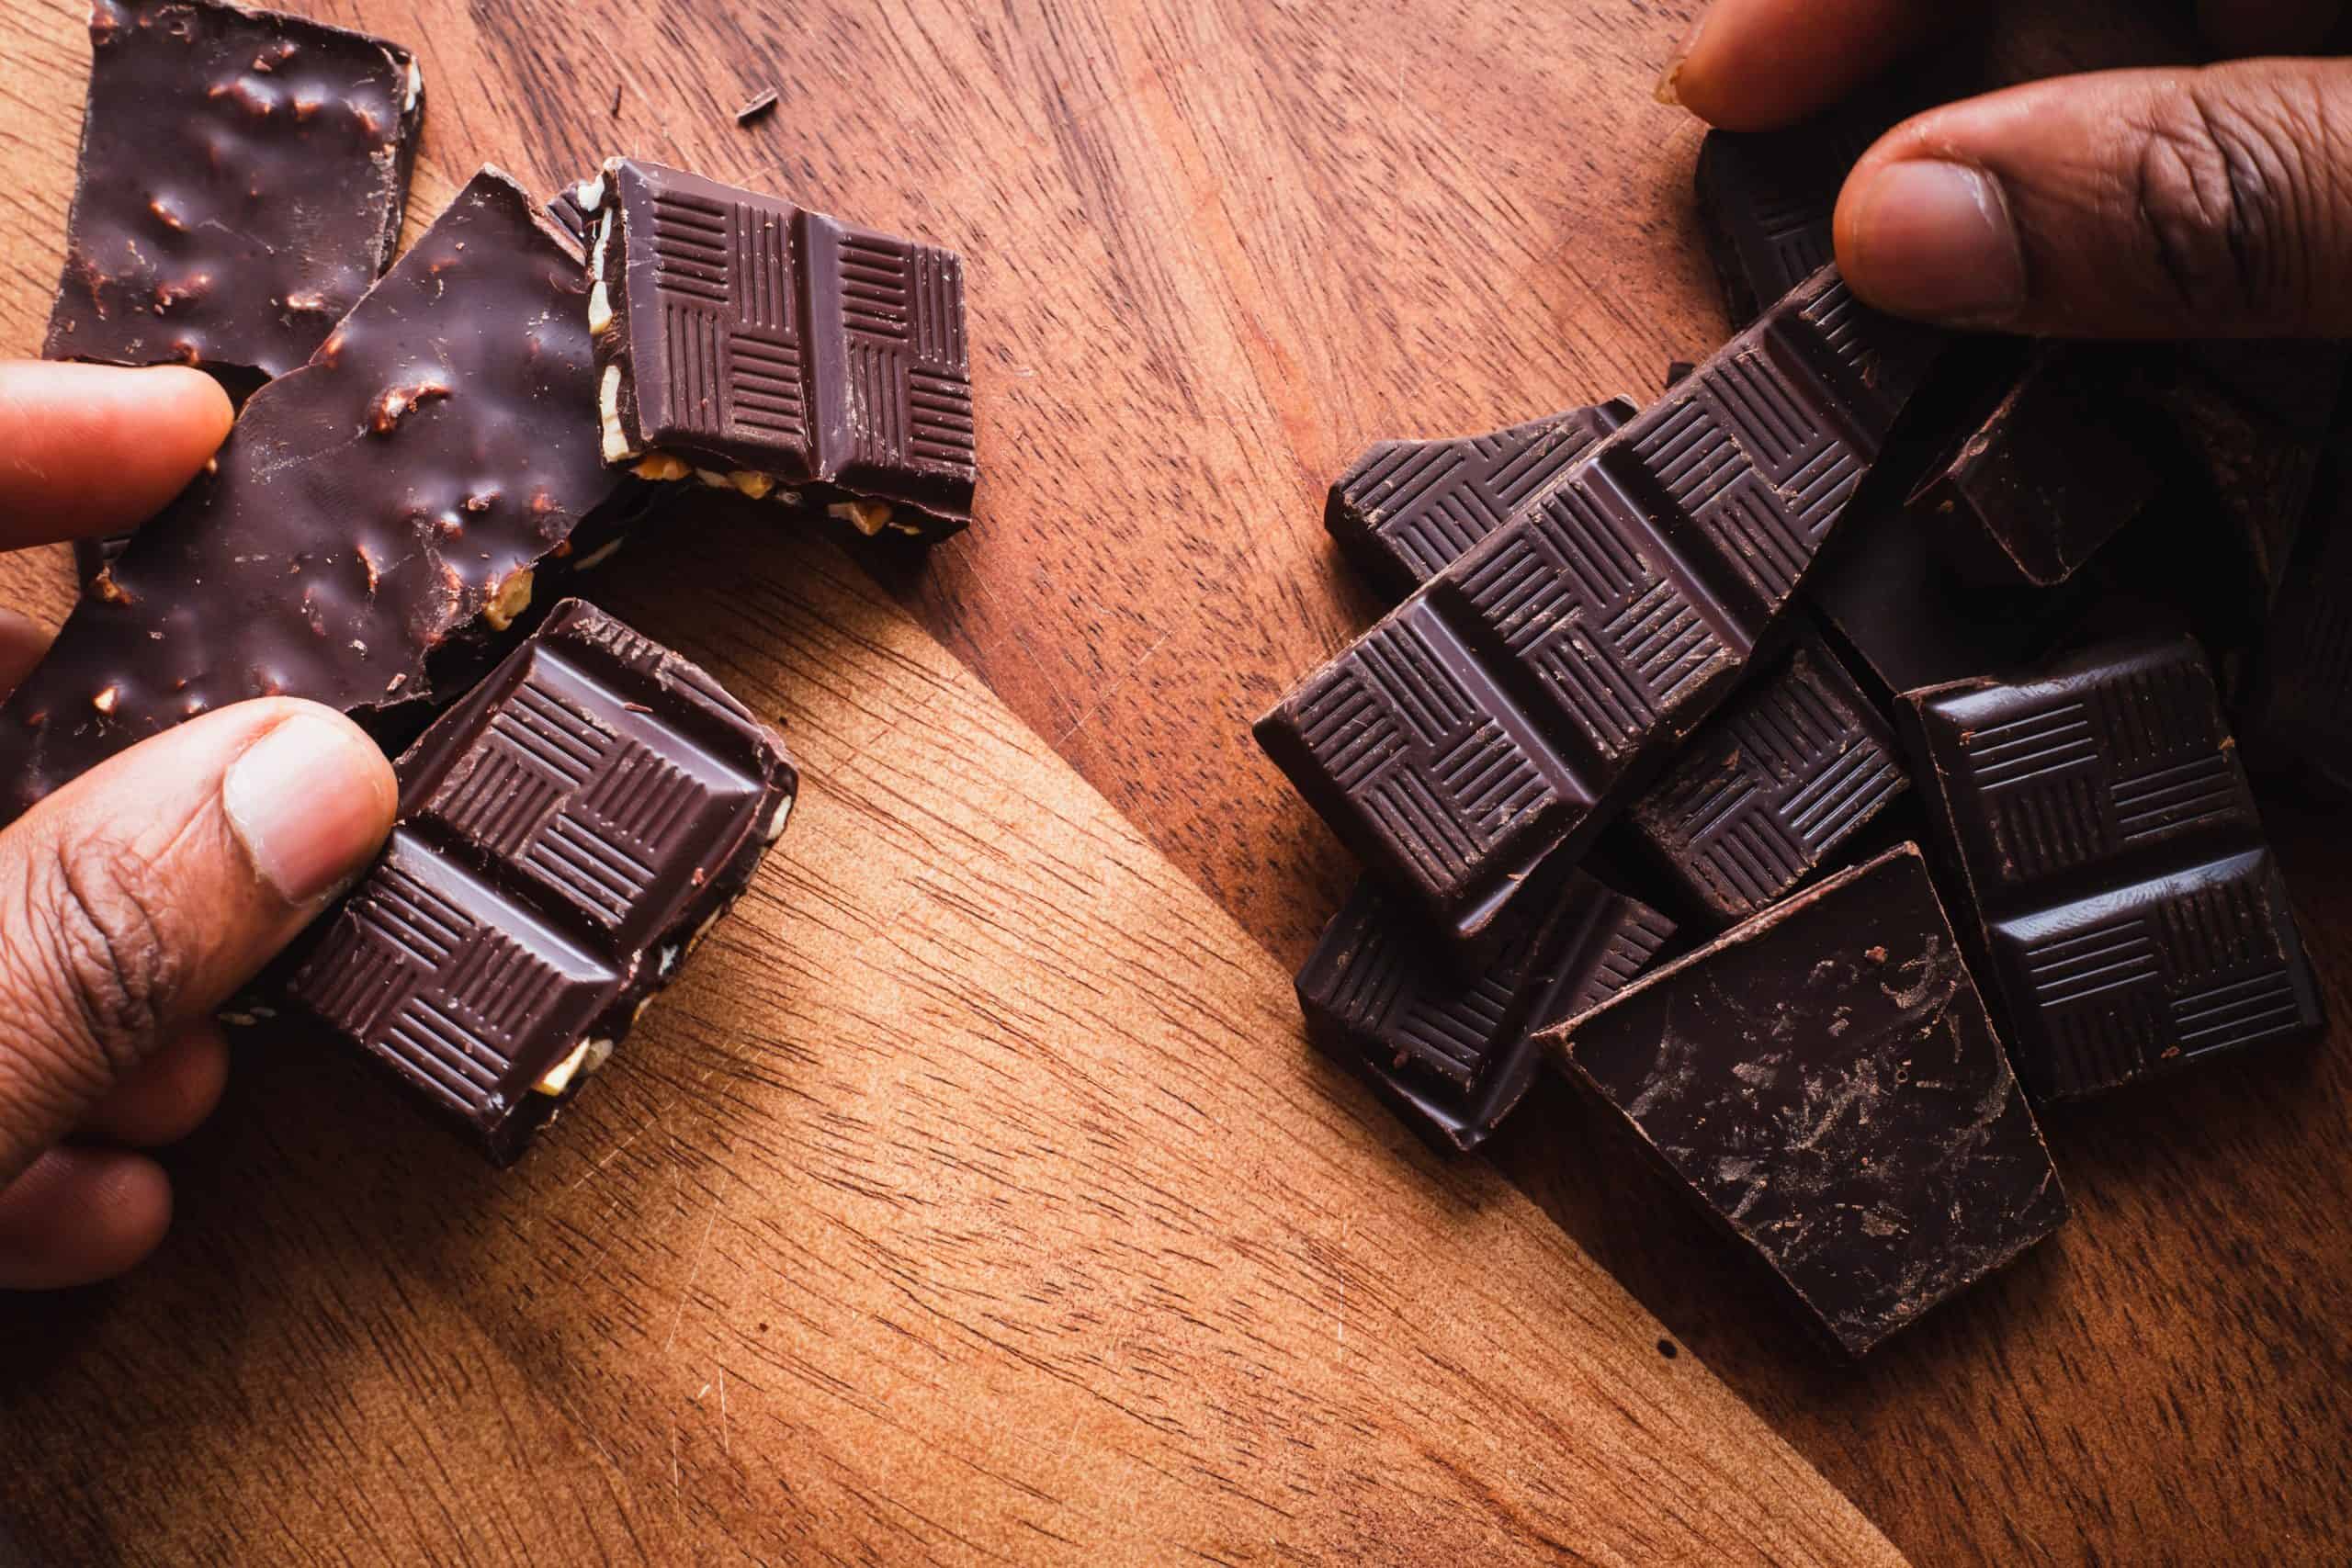 aktívne látky ukryté v čokoláde - louis hansel shotsoflouis 6fRyao7izMk unsplash scaled - Aktívne látky ukryté v čokoláde